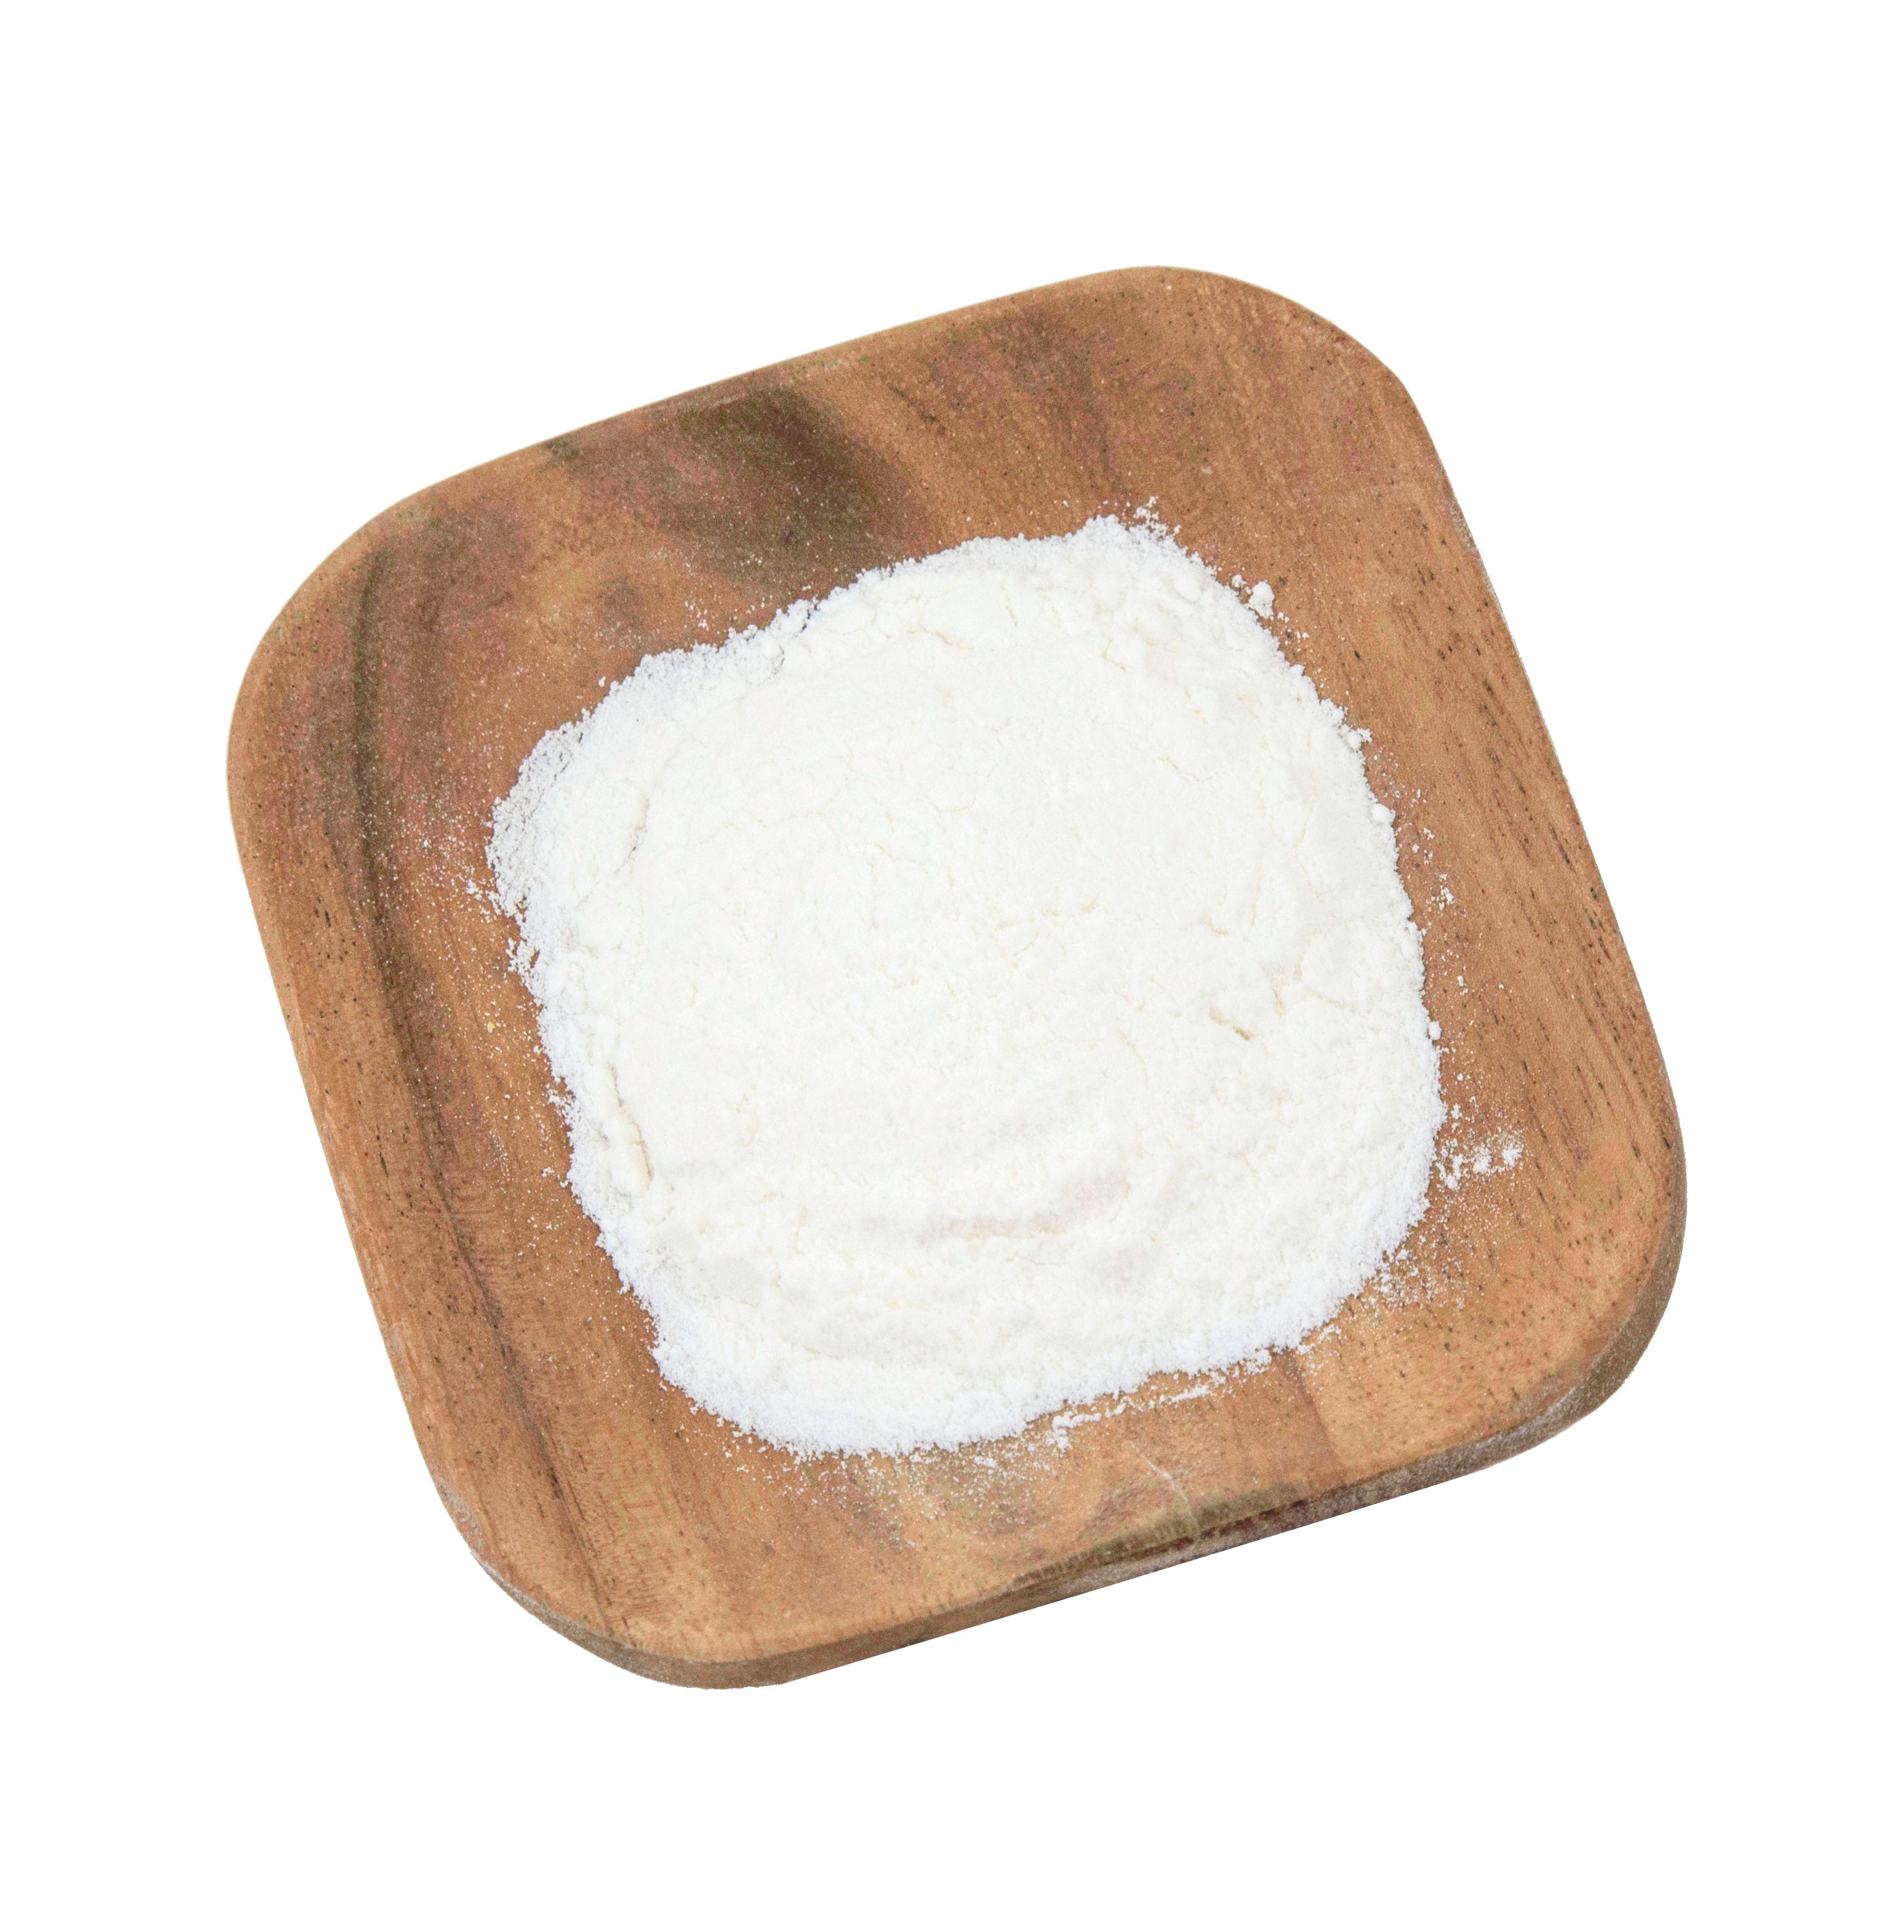 Lifestyle Markets Organic White Rice Flour (400g) - Lifestyle Markets